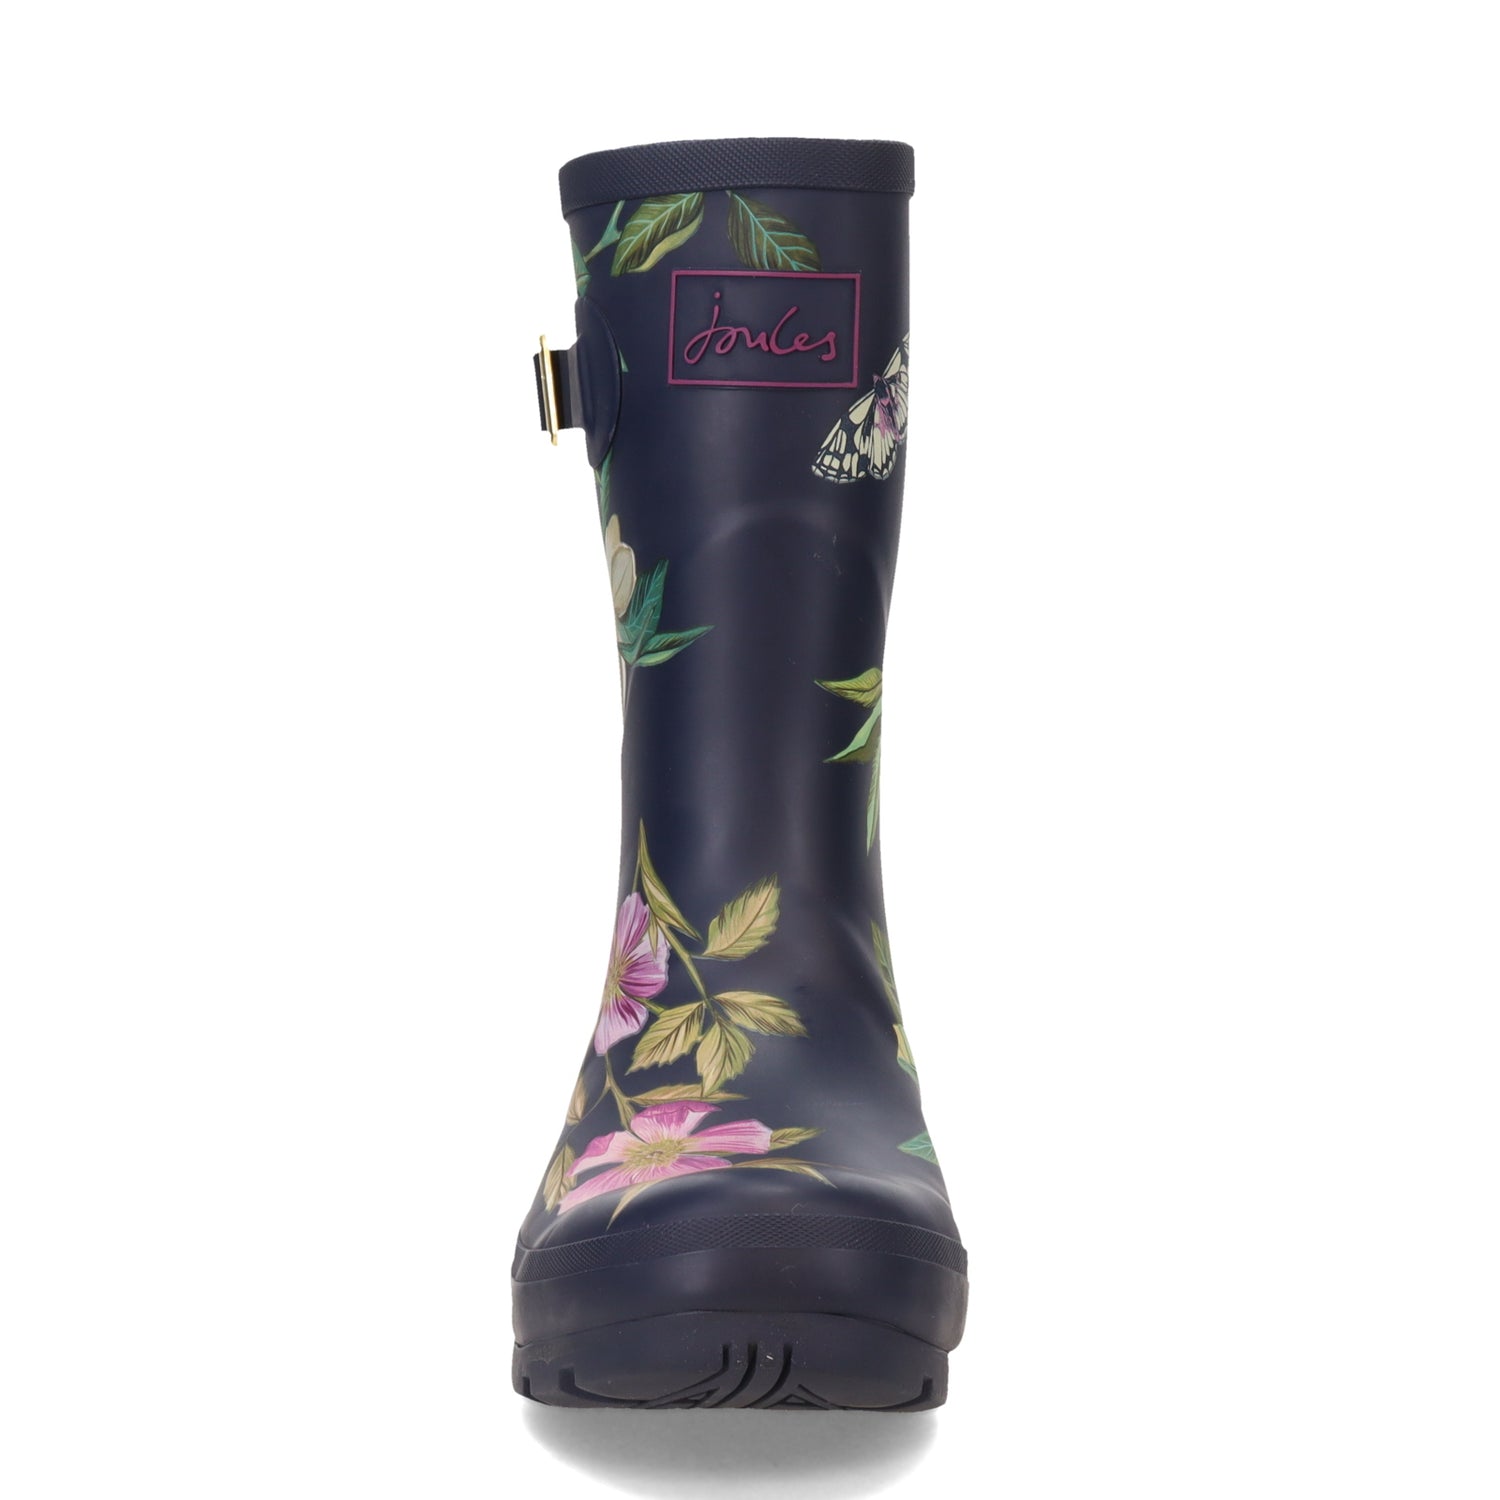 Peltz Shoes  Women's Joules Mollywelly Rain Boot NAVY FLOWER 216564-NAVFLORL